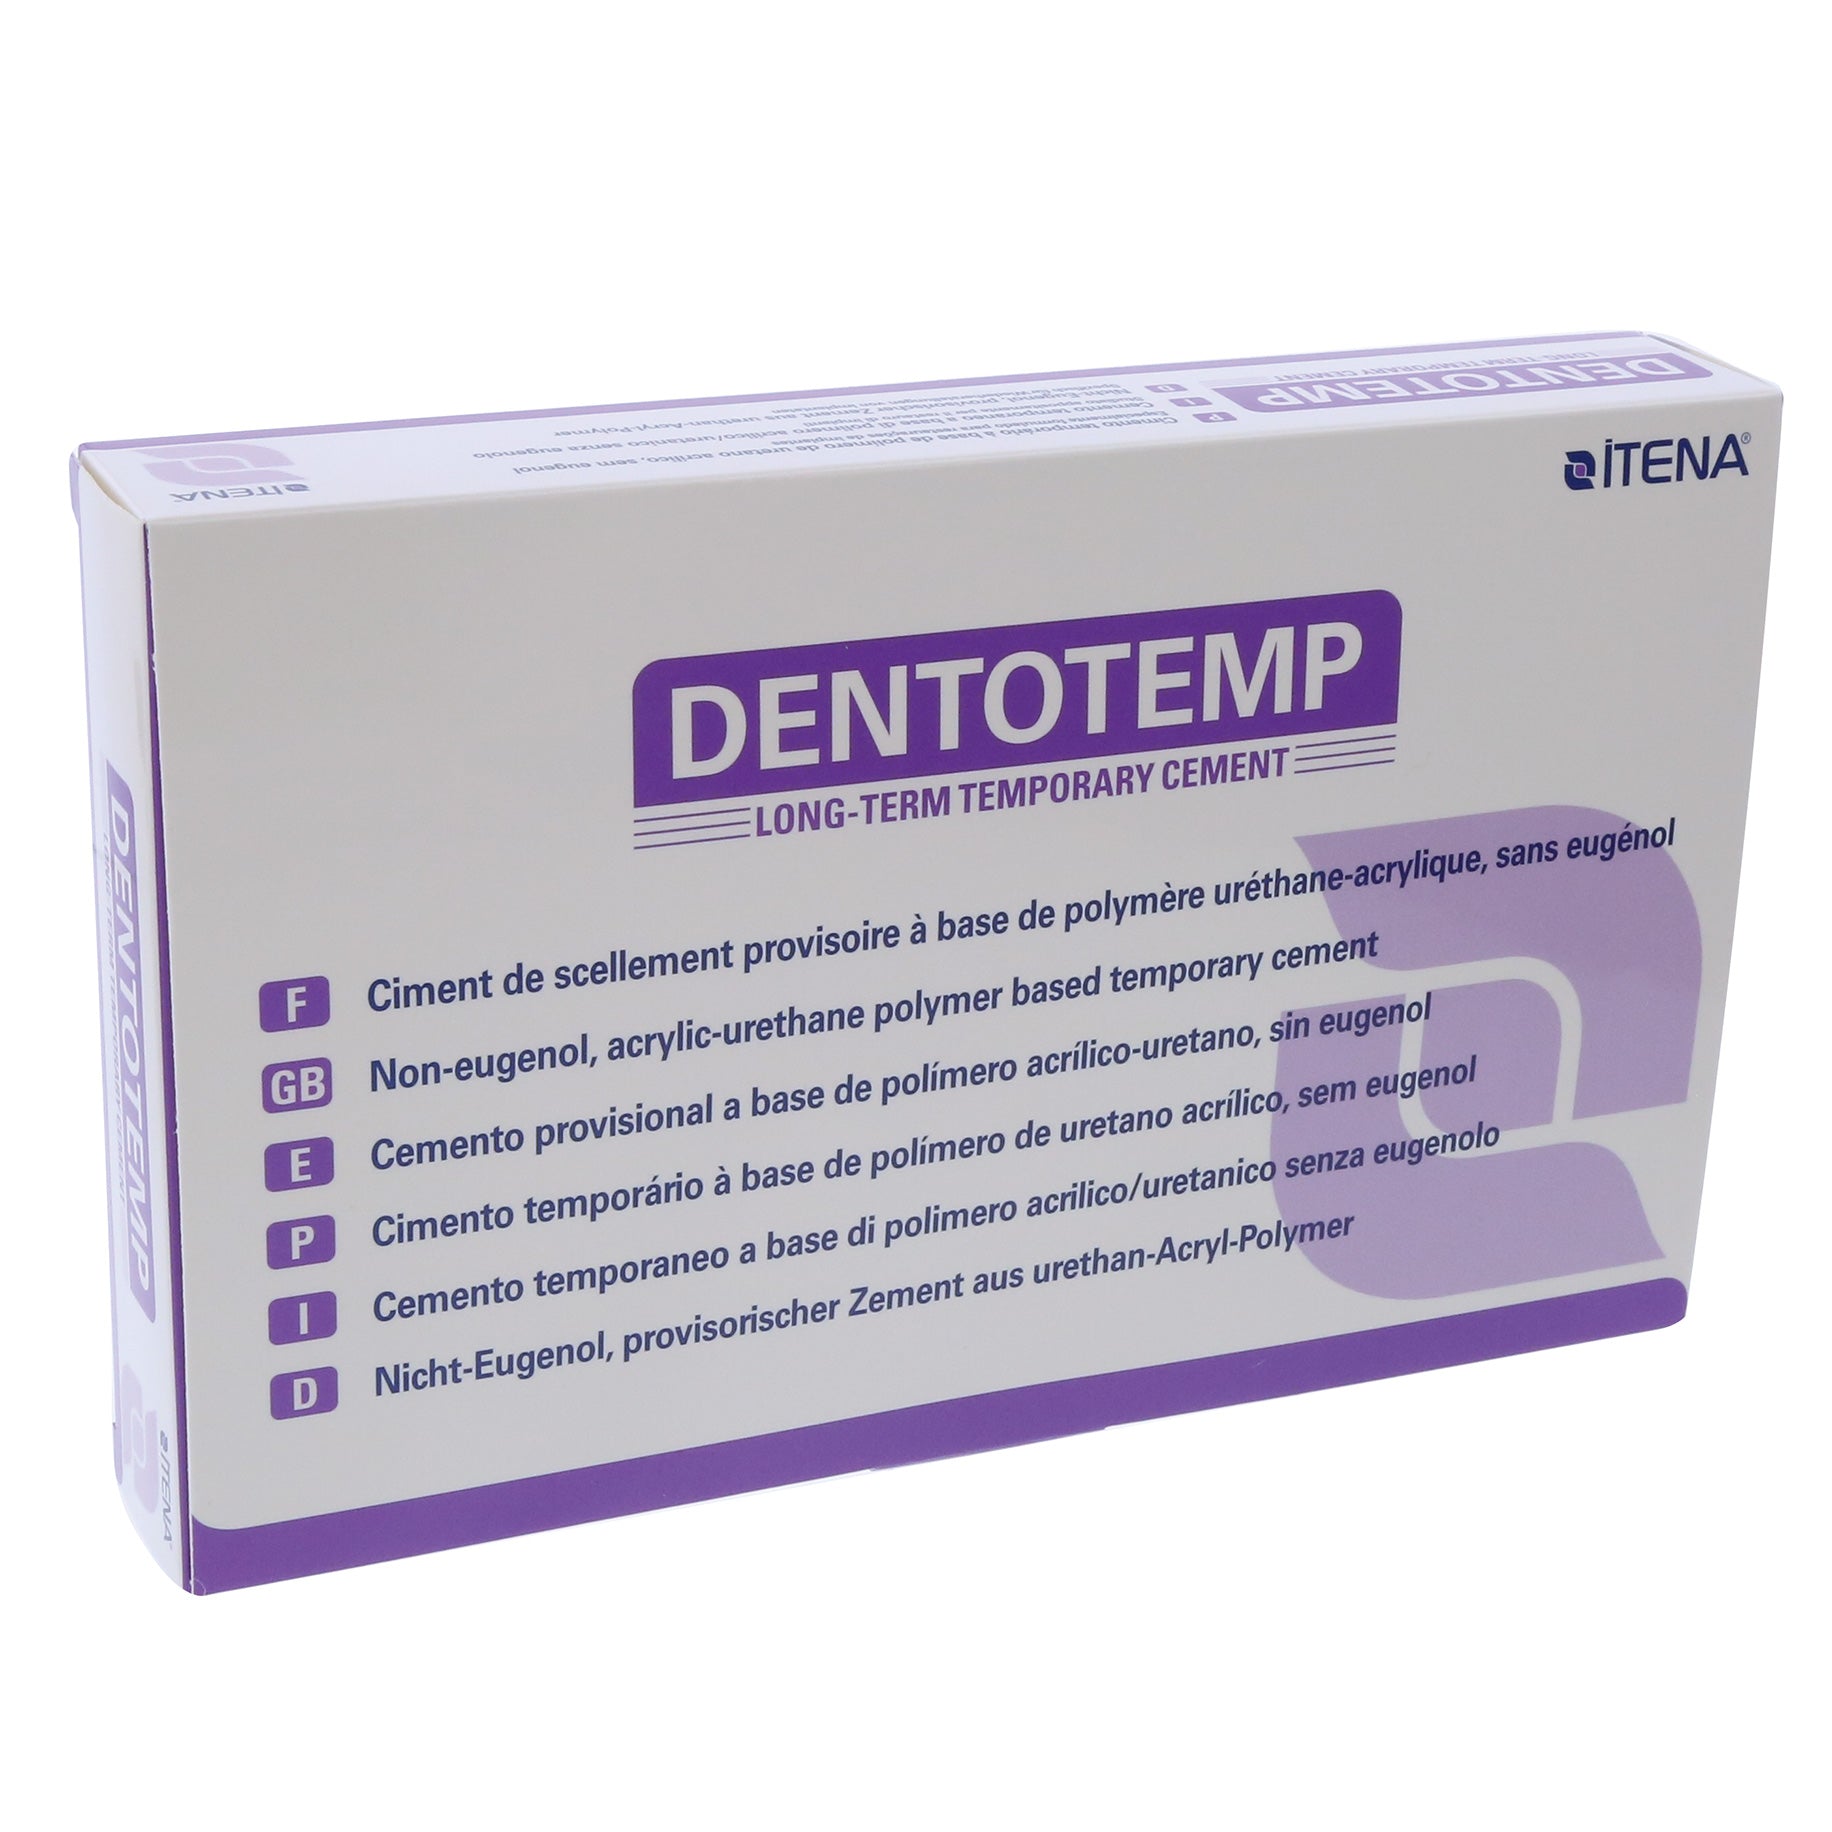 DentoTemp